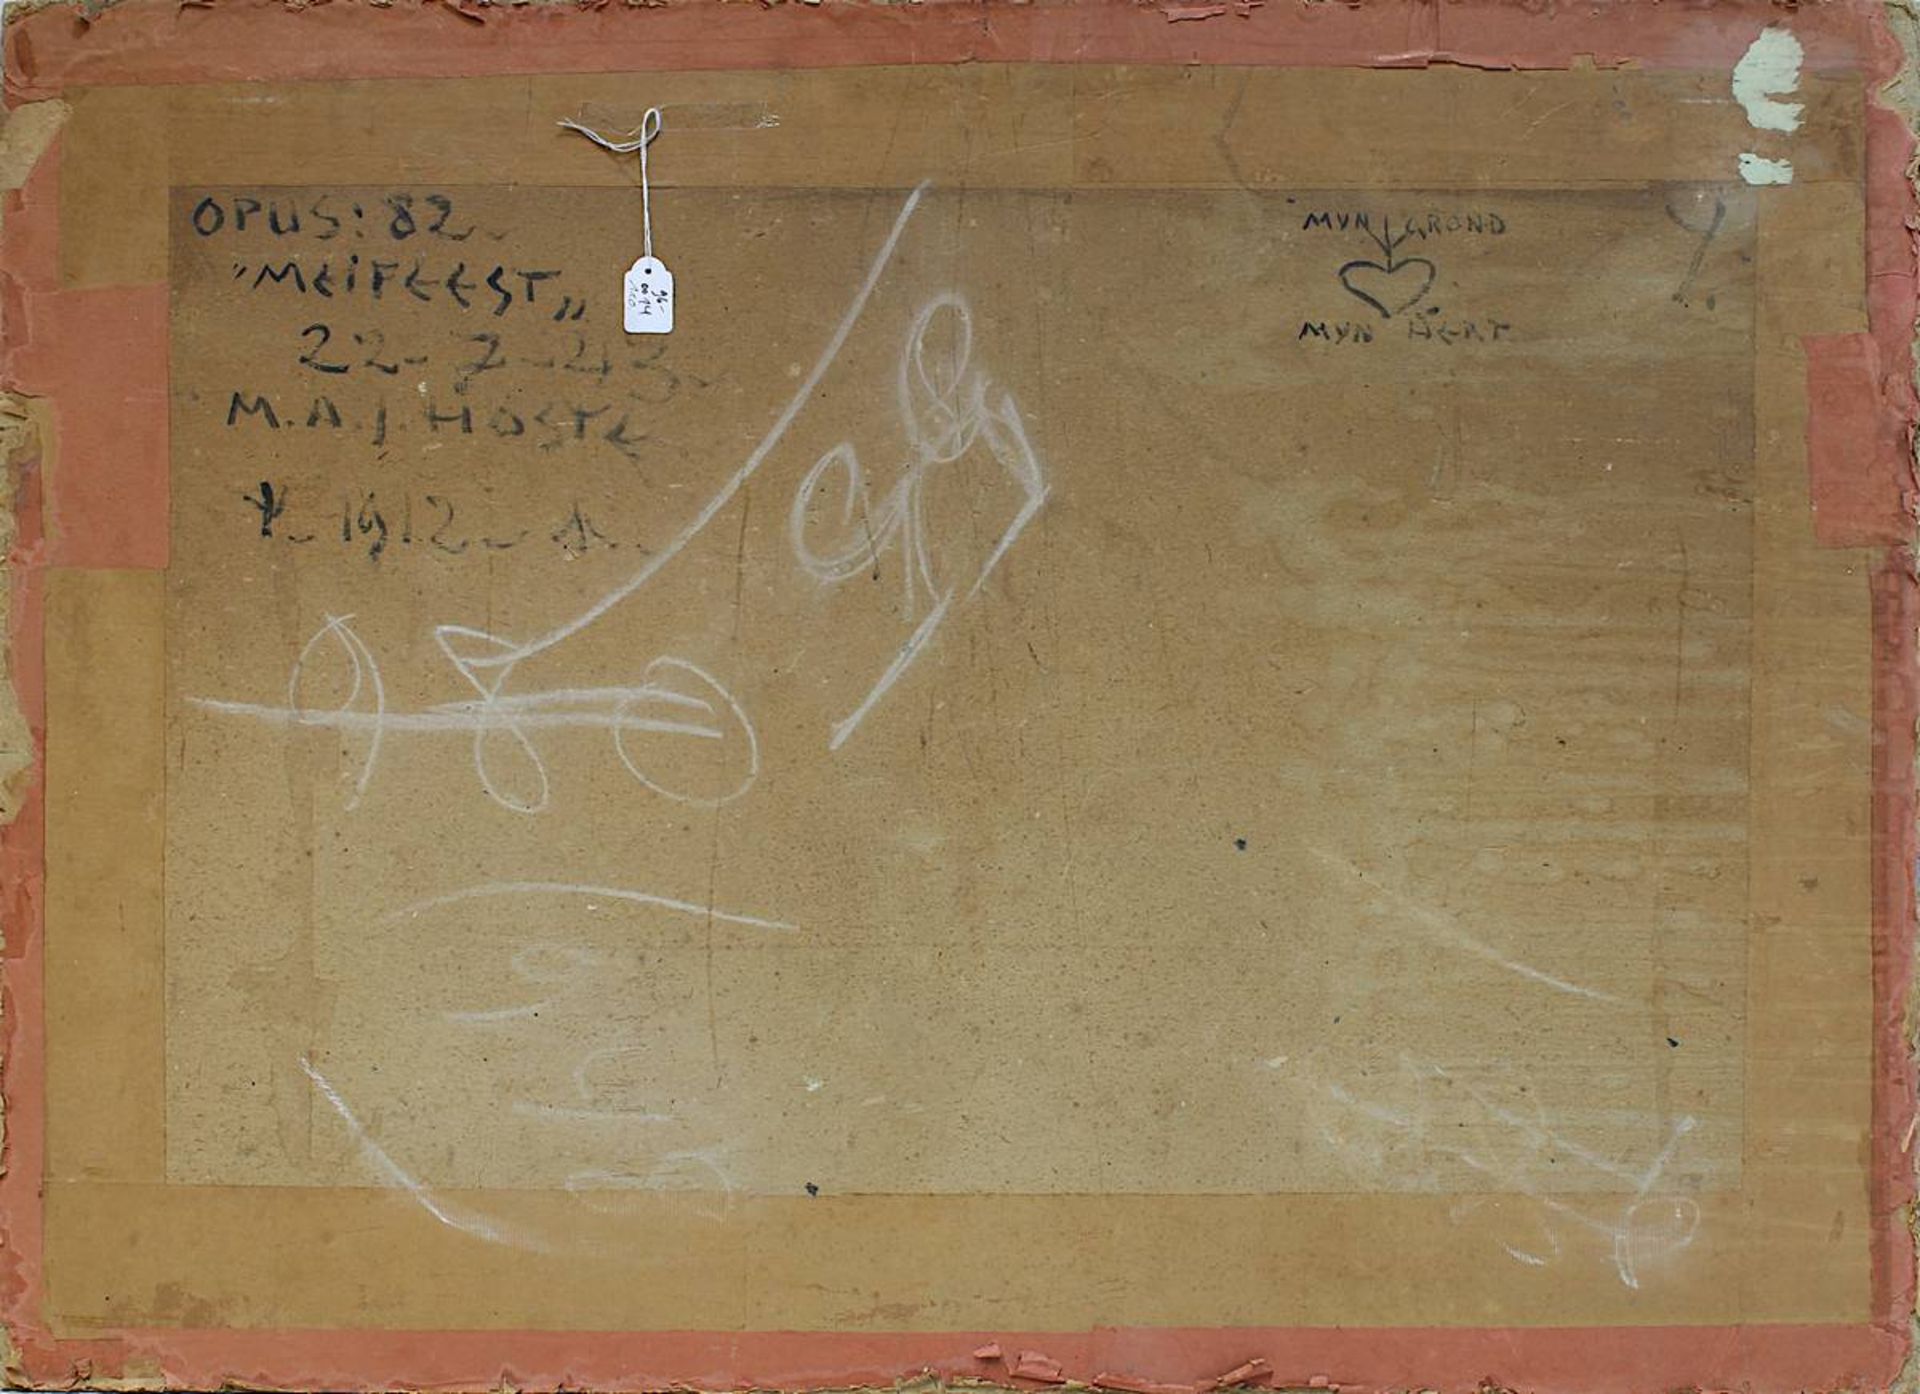 Hoste, M.A.J. (Dänischer Maler 1912 - ?), Maifest, Öl auf Malkarton, rechts unten signiert, - Image 3 of 3